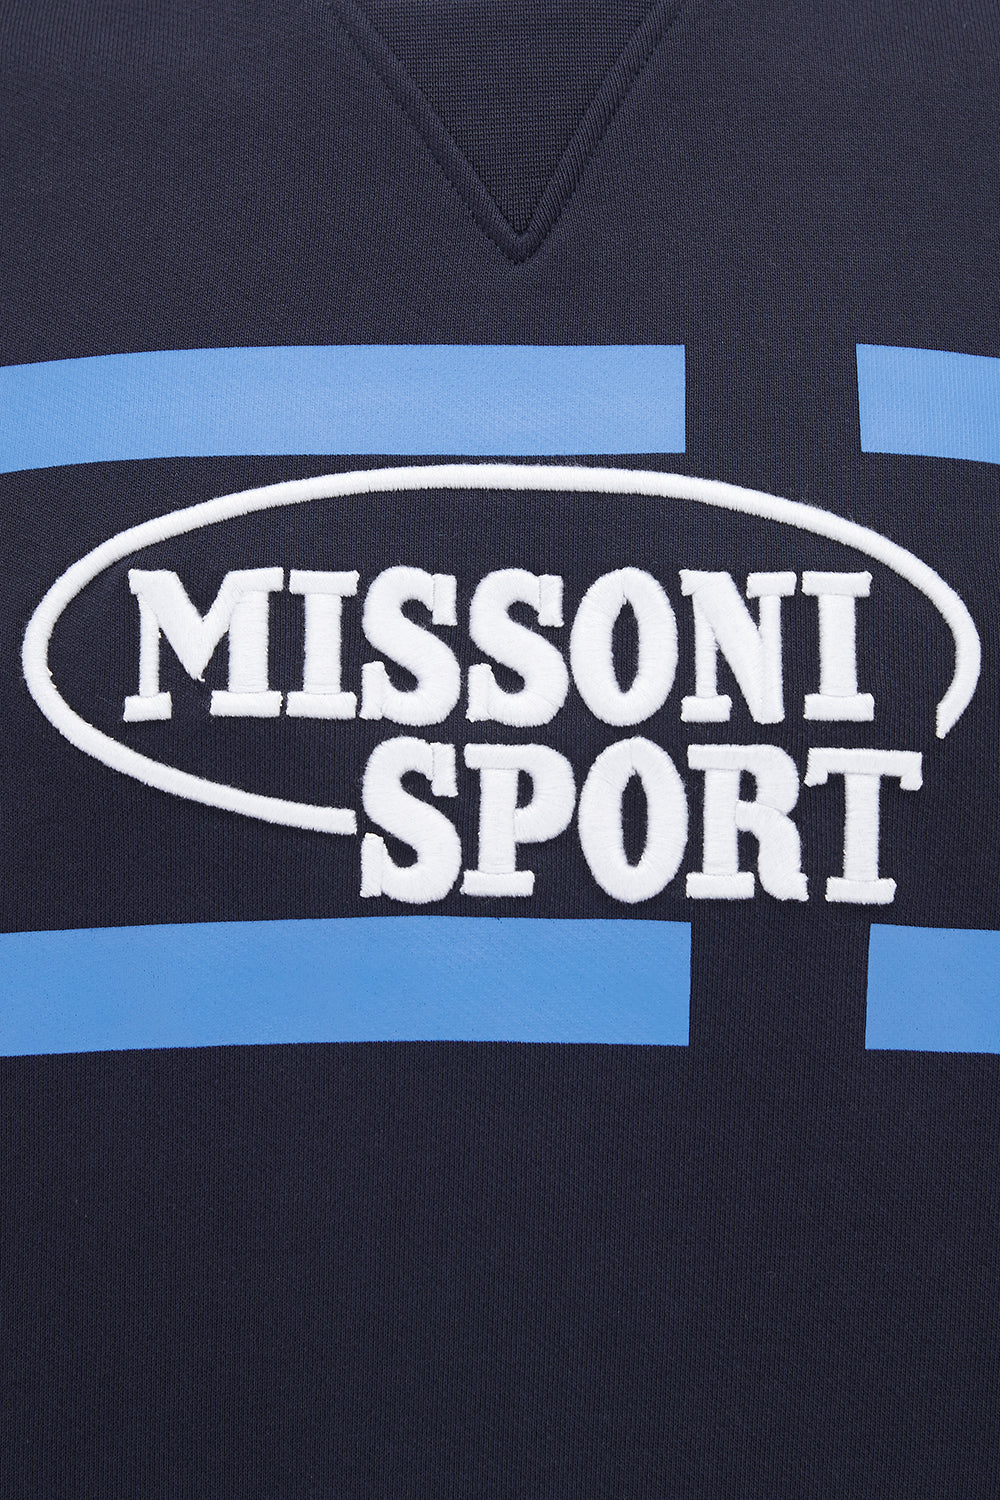 Missoni Men’s Cotton Sweater Navy - Close Up Logo